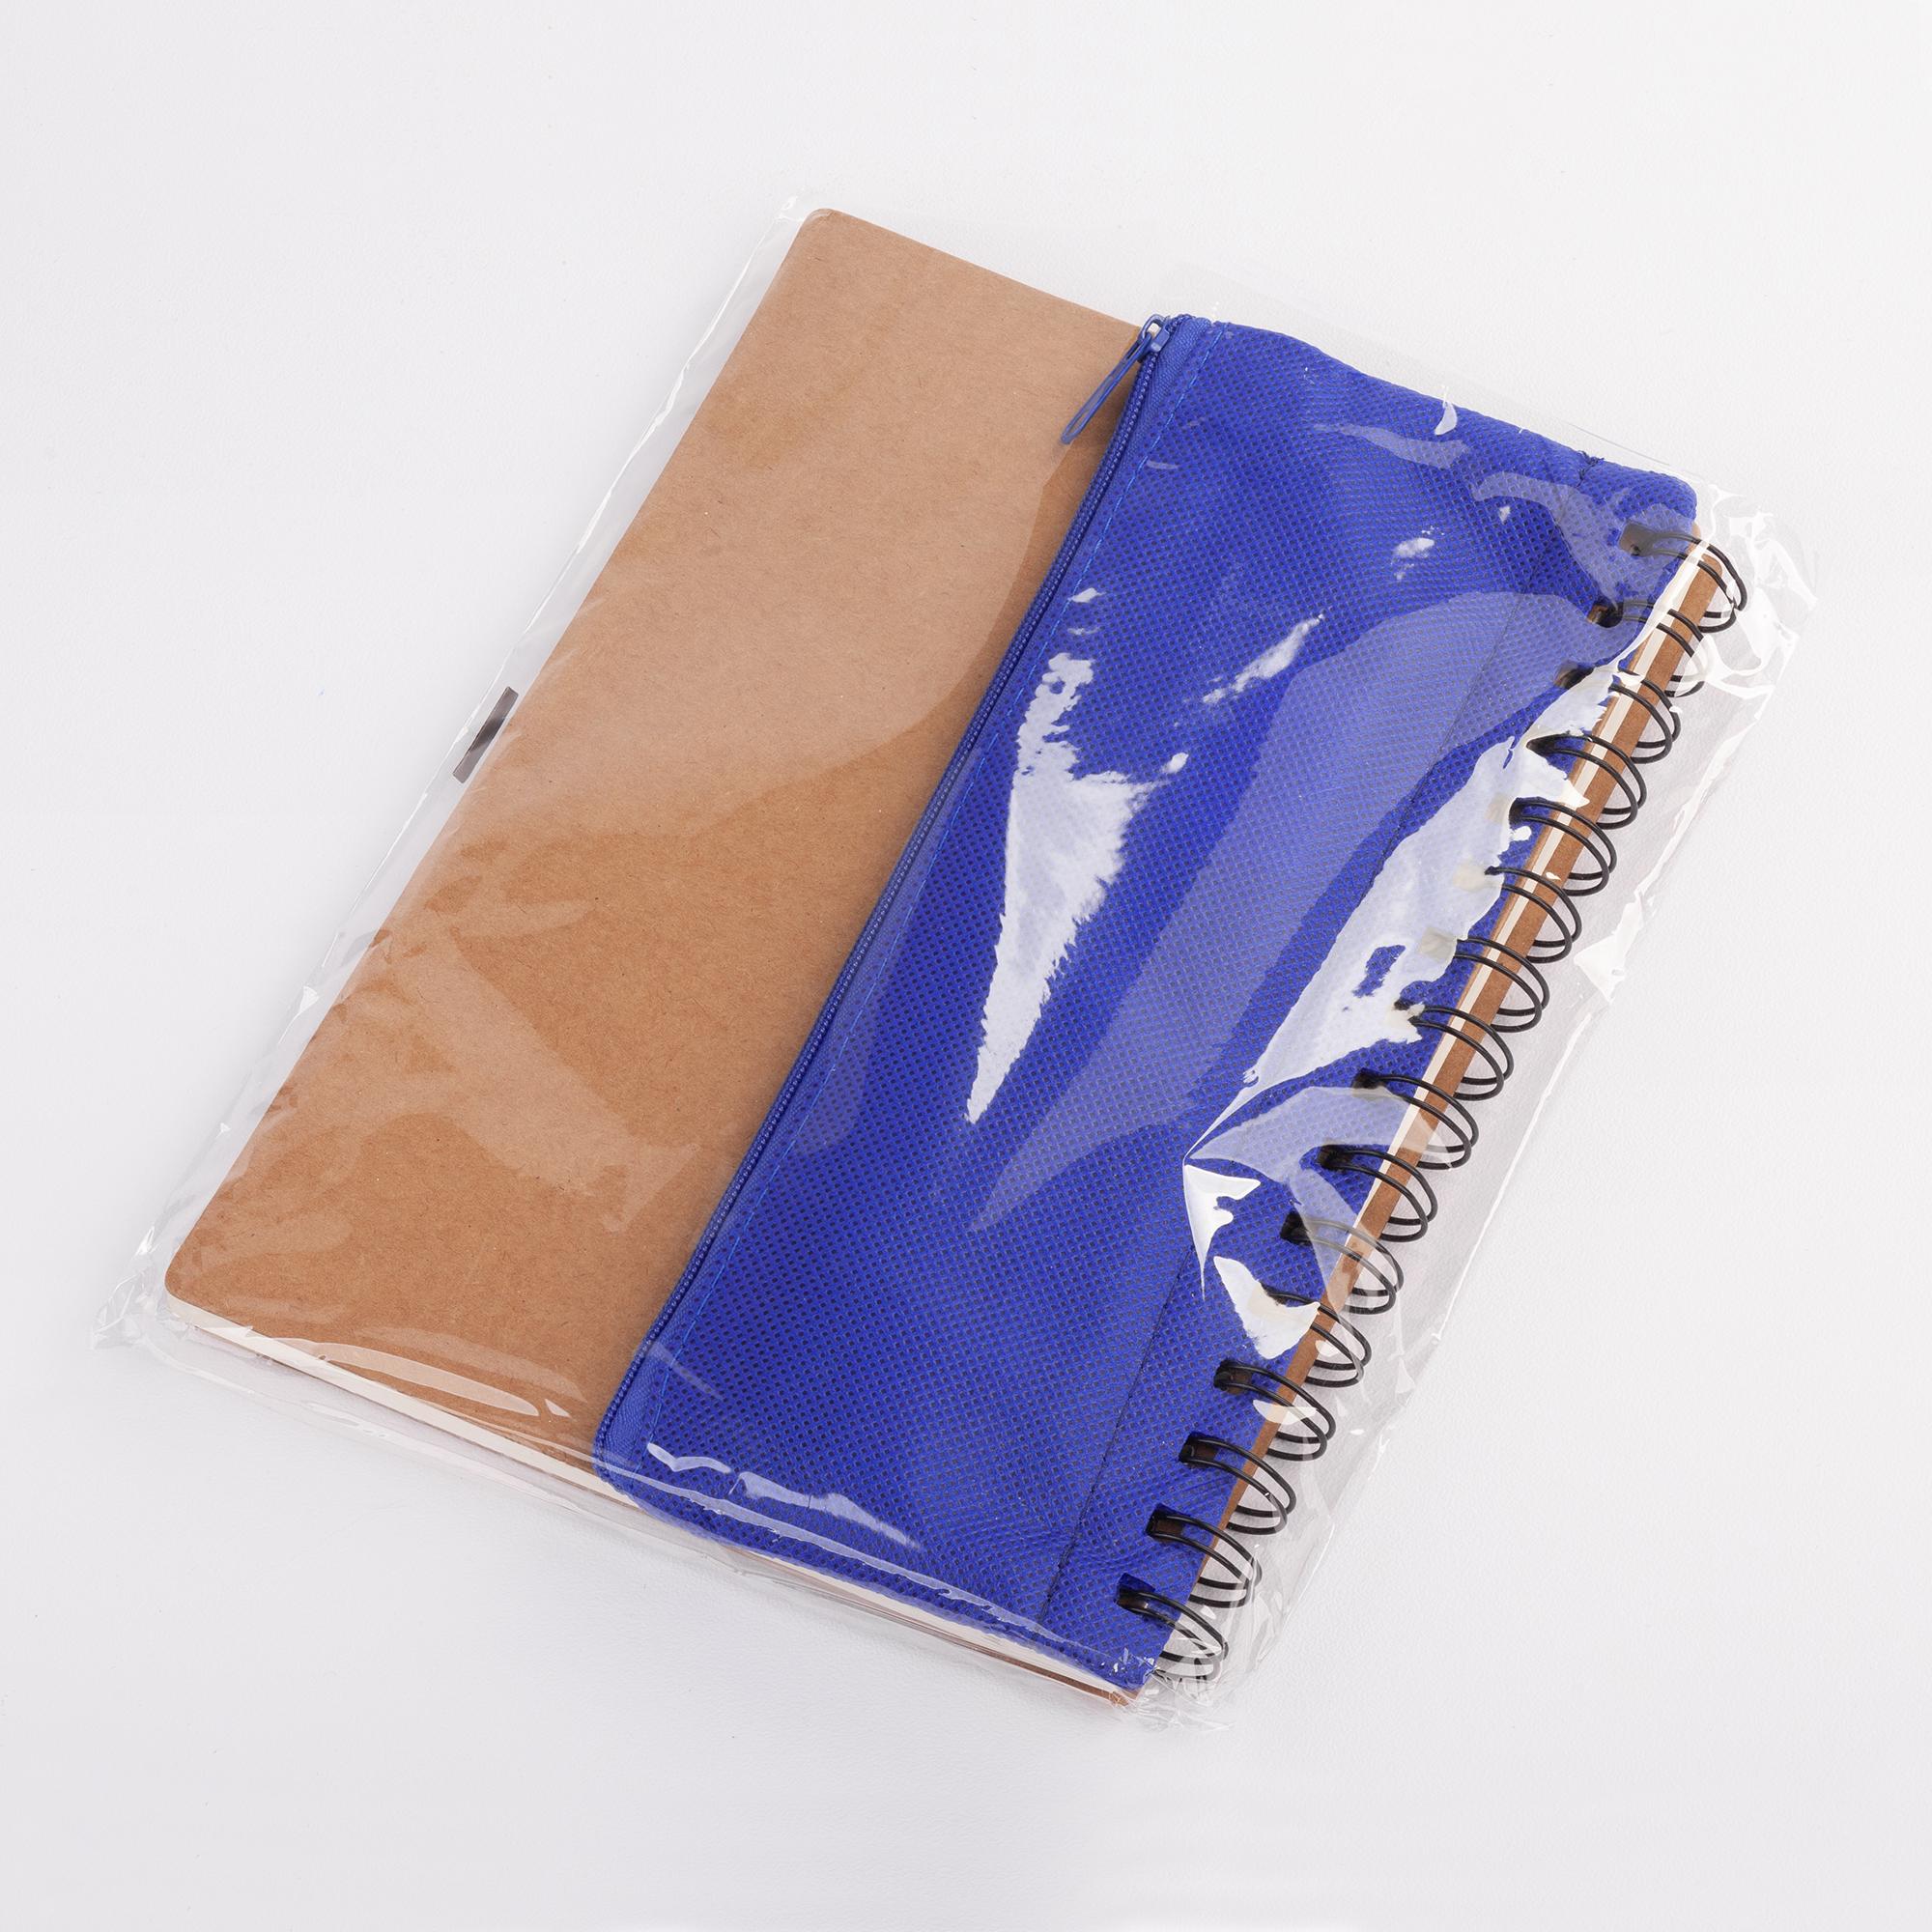 Блокнот "Full kit" с пеналом и канцелярскими принадлежностями, цвет синий, фото 4